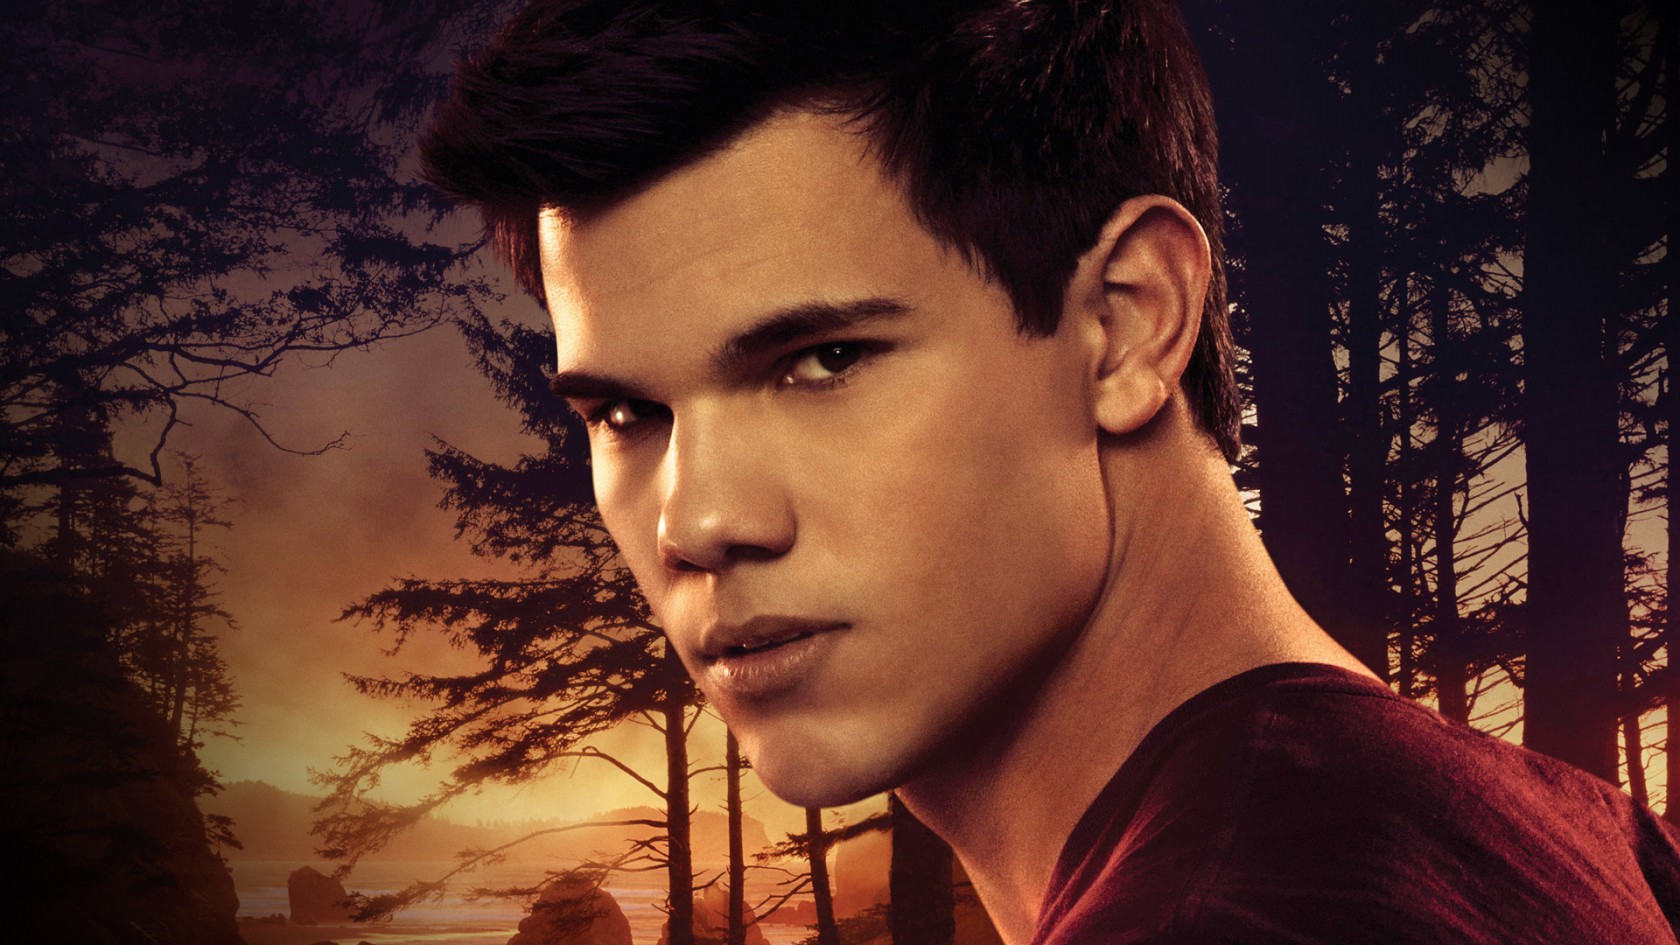 Taylor Lautner Photoshoot Wallpaper Cool HD